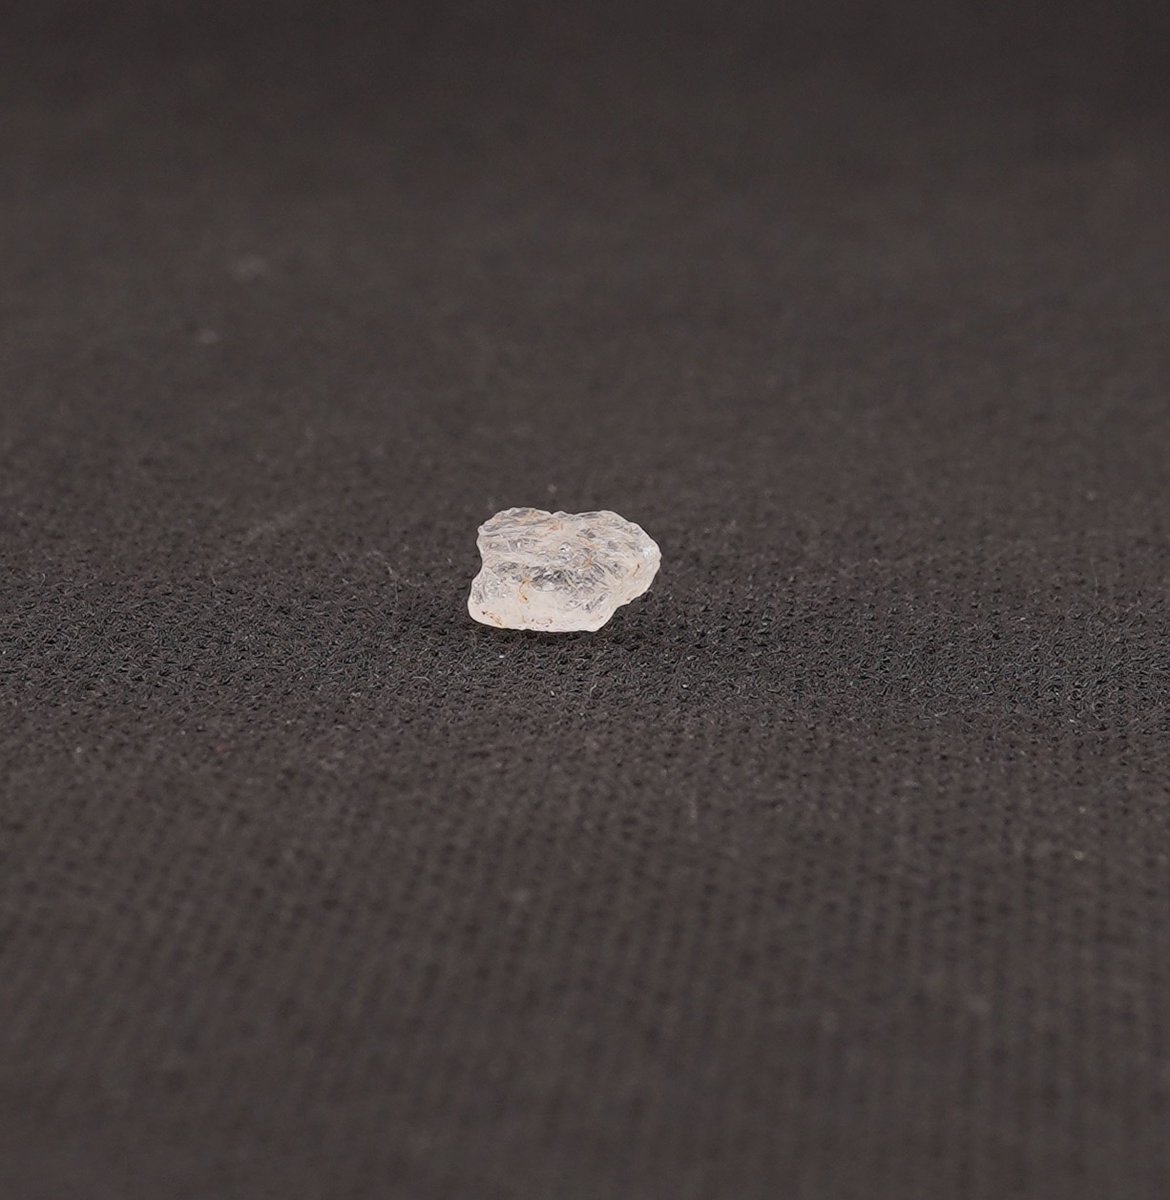 Fenacit nigerian cristal natural unicat f246